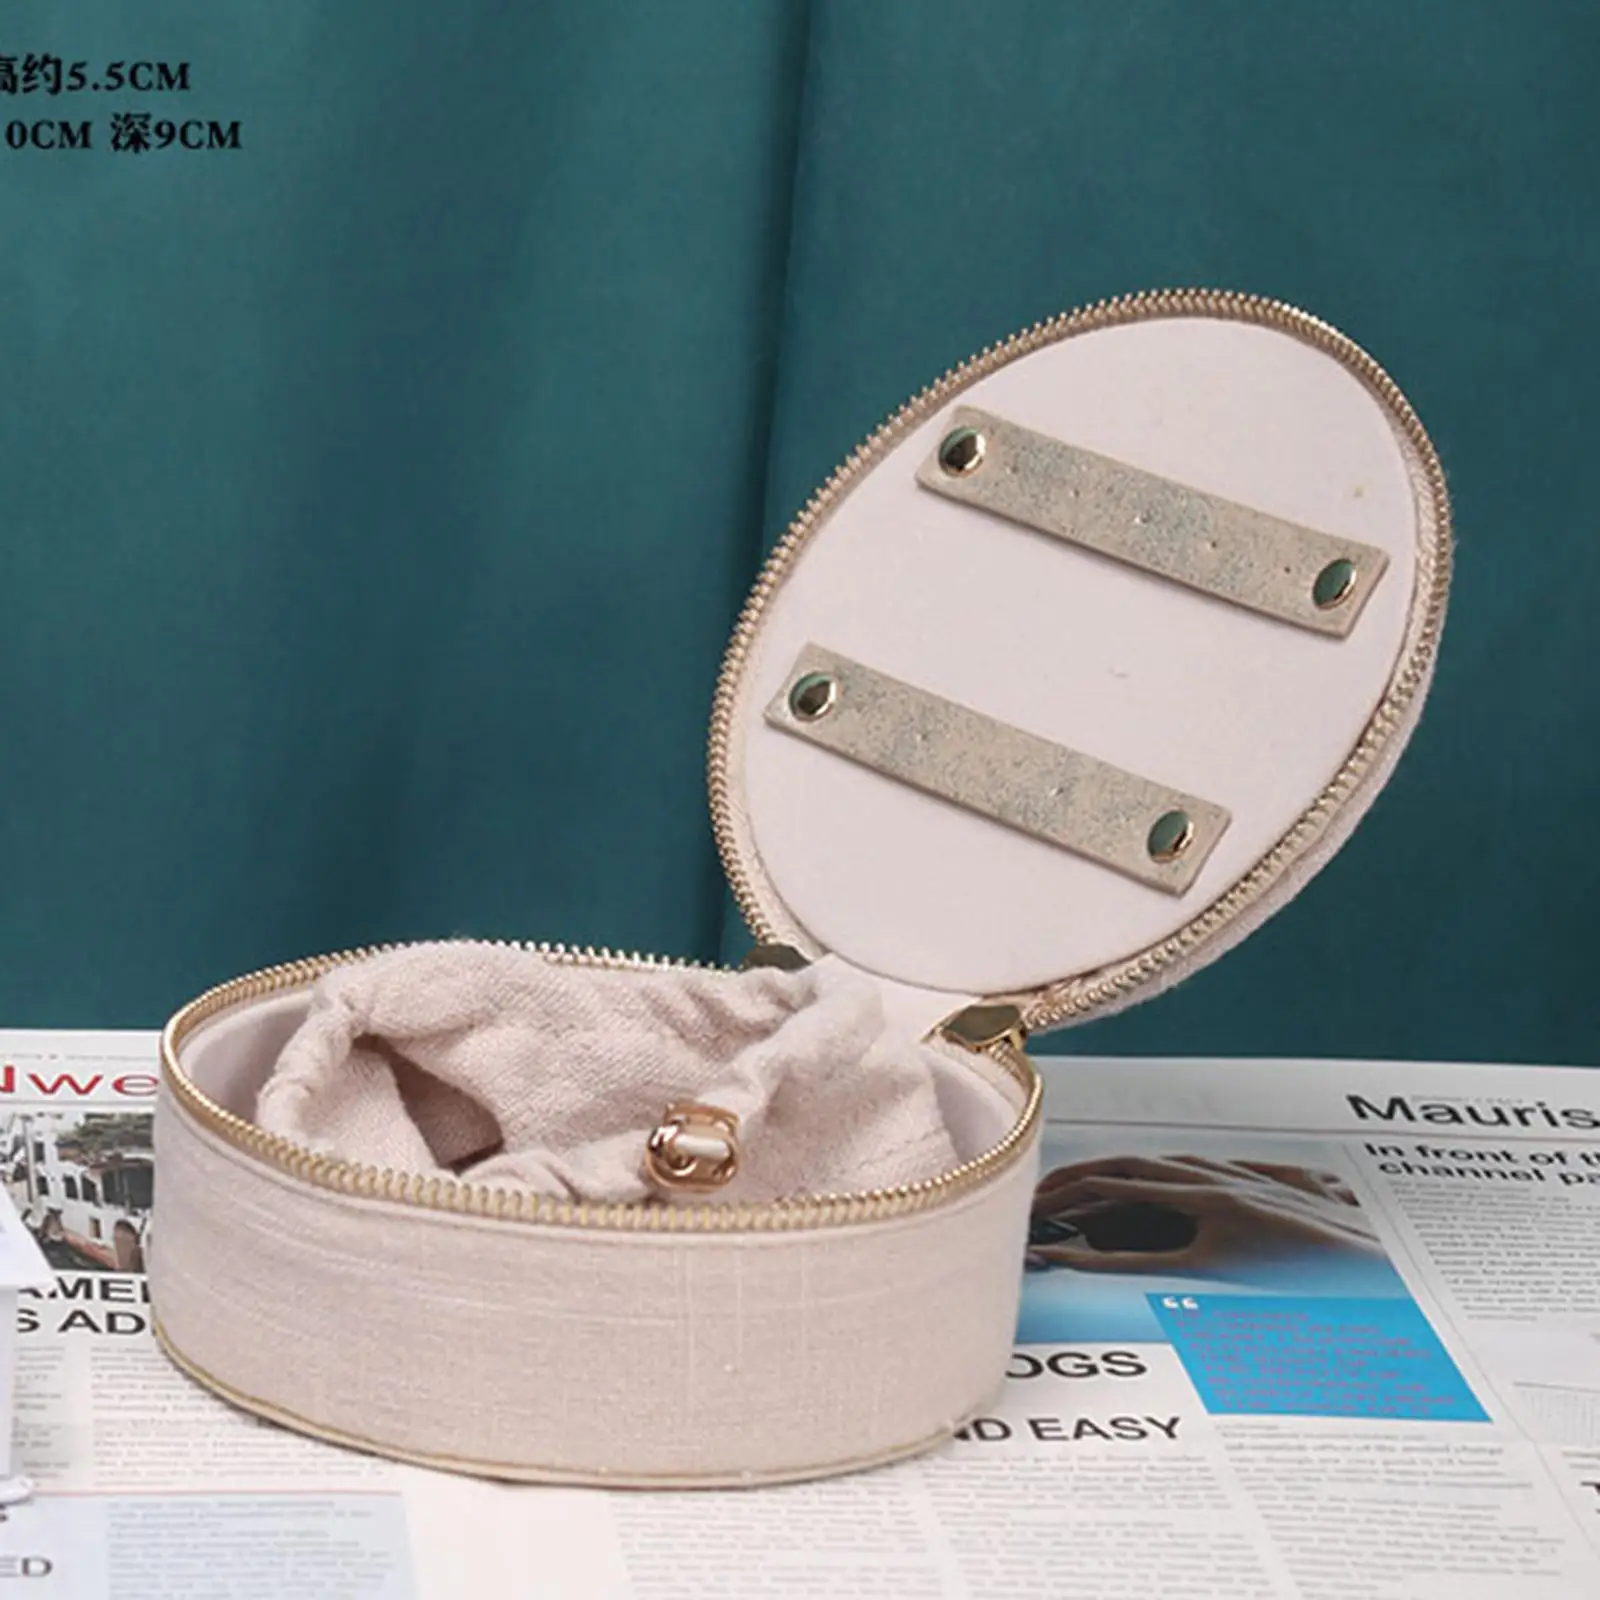 Portable Box Small Display Holder for Ear Studs Bracelets Girlfriend